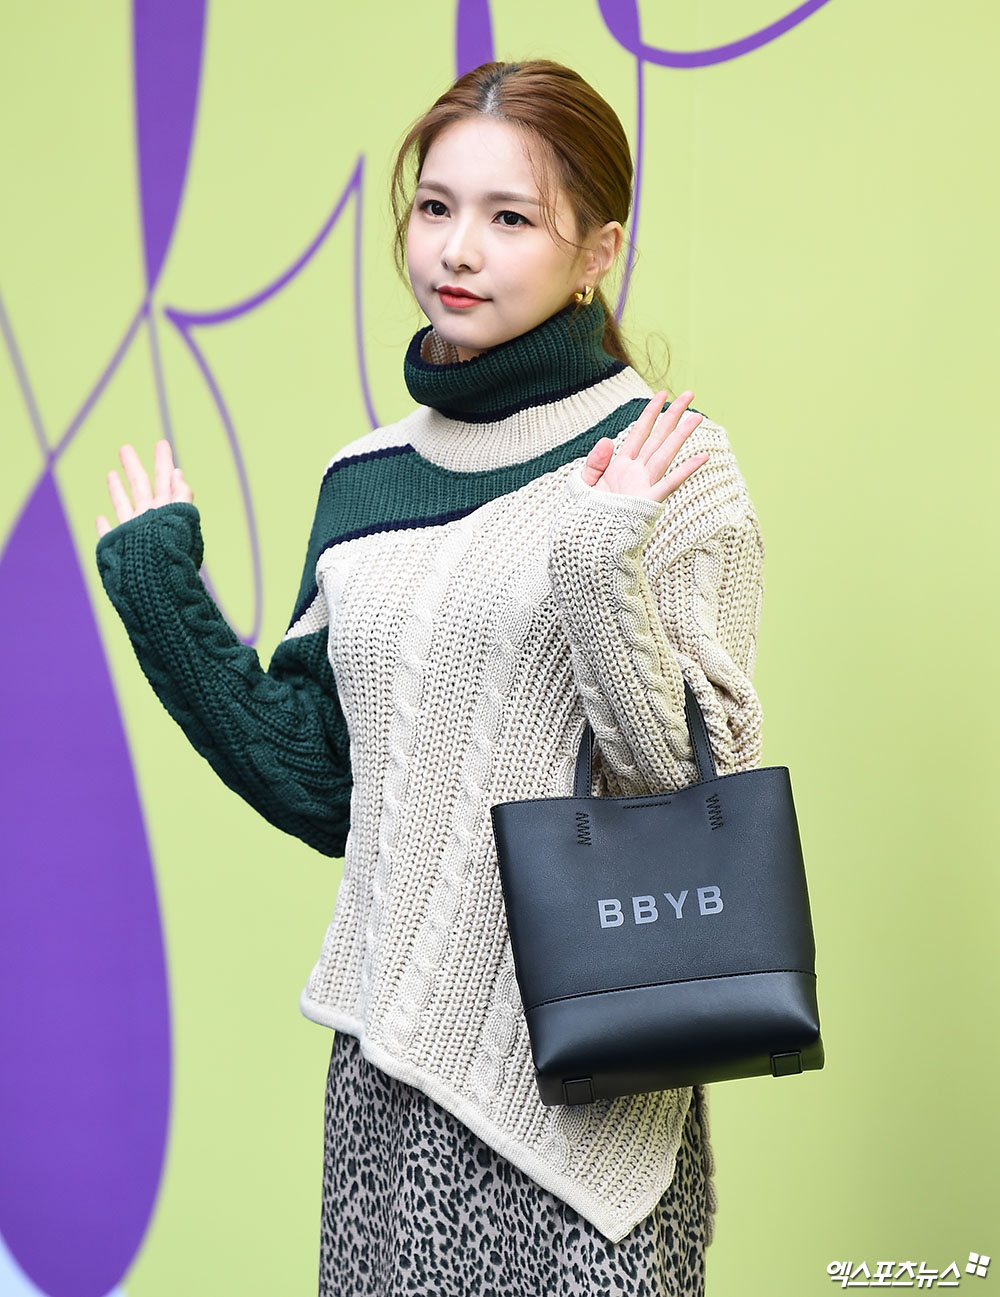 BBYB 재이 2020 S/S 서울패션위크 포토월 착용 가방 (비비와이비 브루니백)